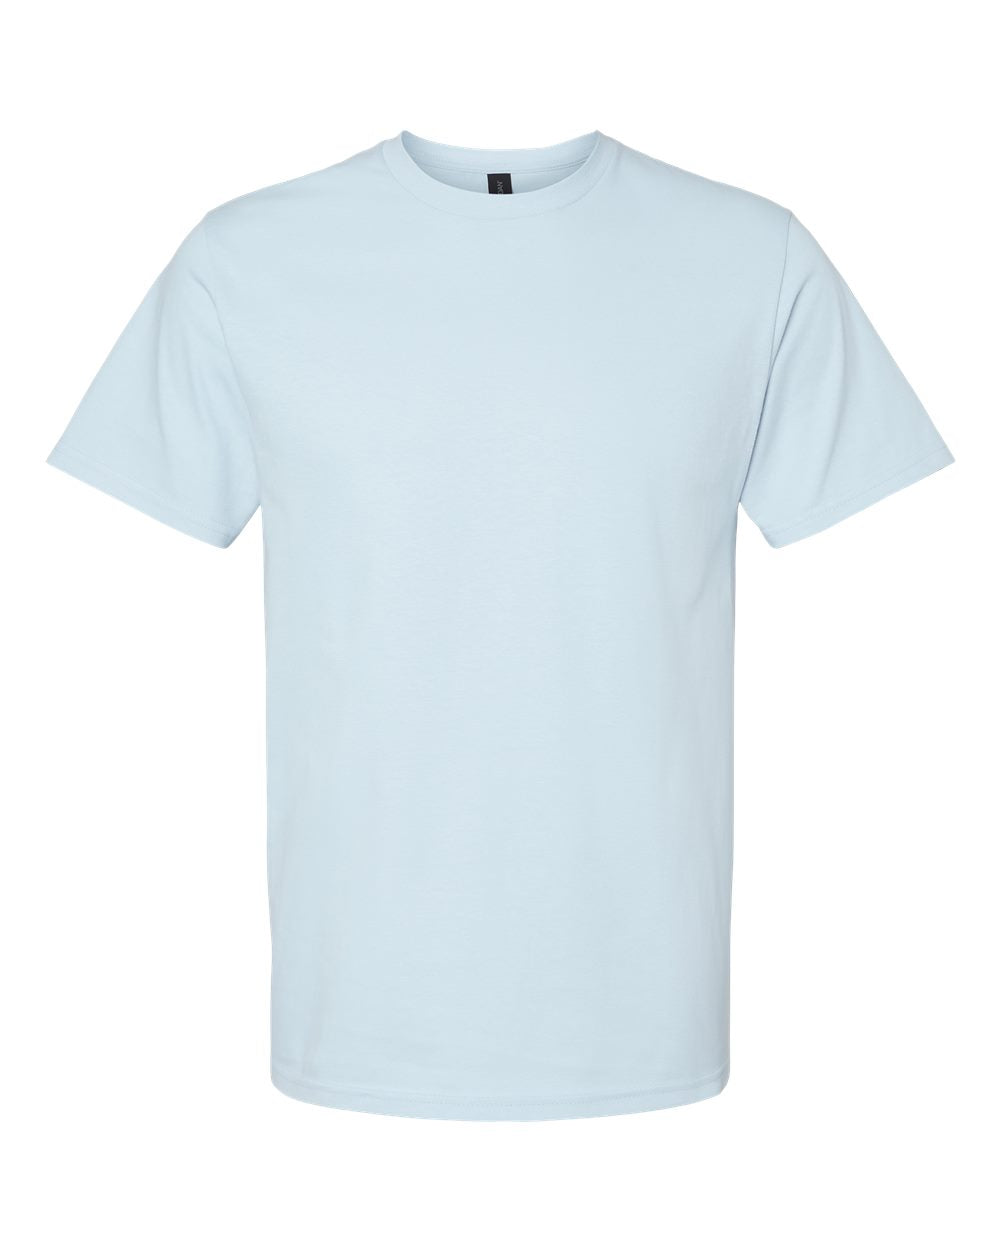 Softstyle® Midweight T-Shirt